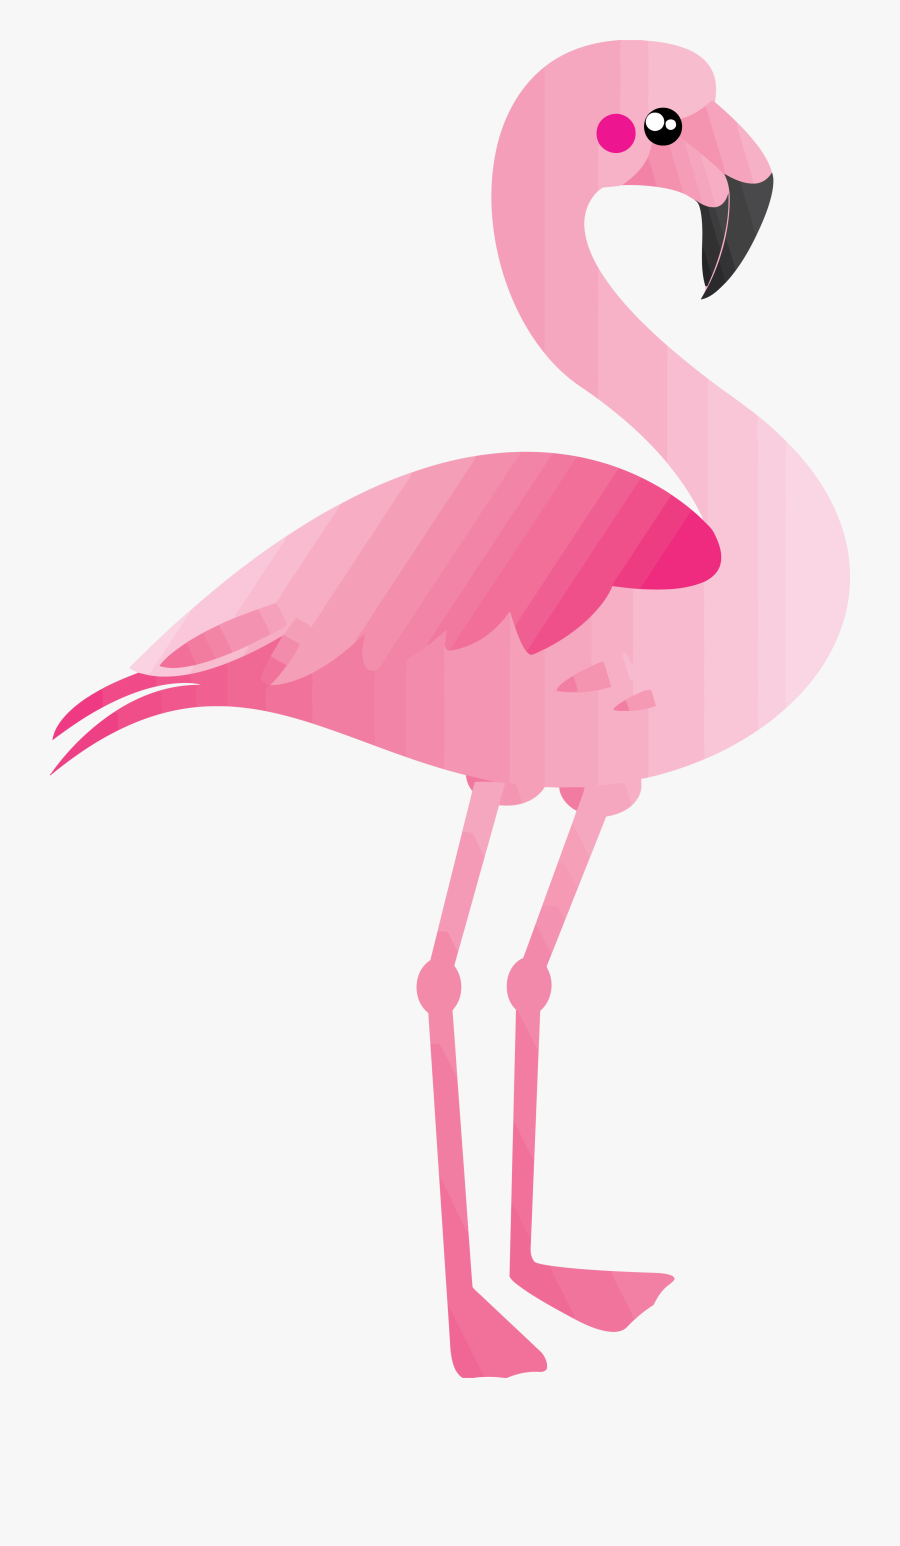 Free To Use Public Domain Flamingo Clip Art - Flamingo Clipart, Transparent Clipart